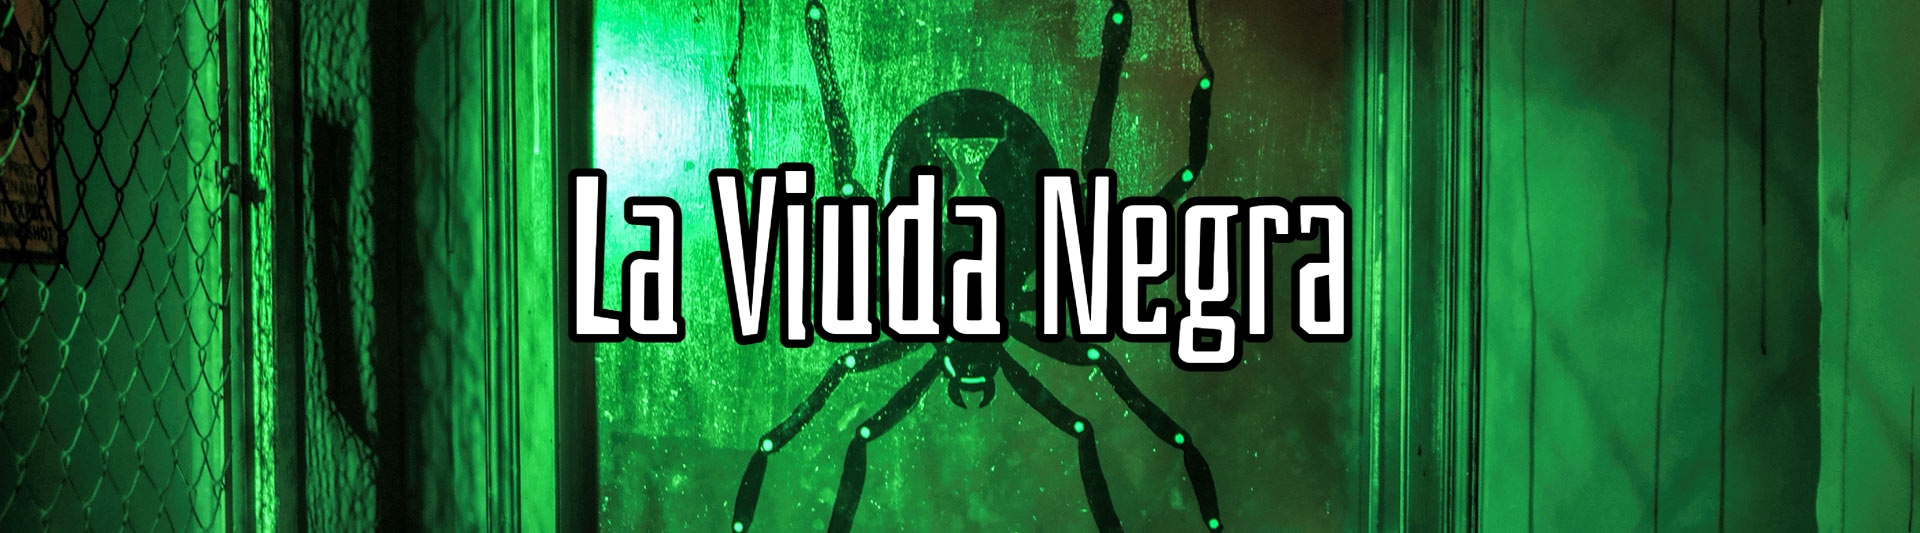 La Viuda Negra - SKP Room - Review Escape Room